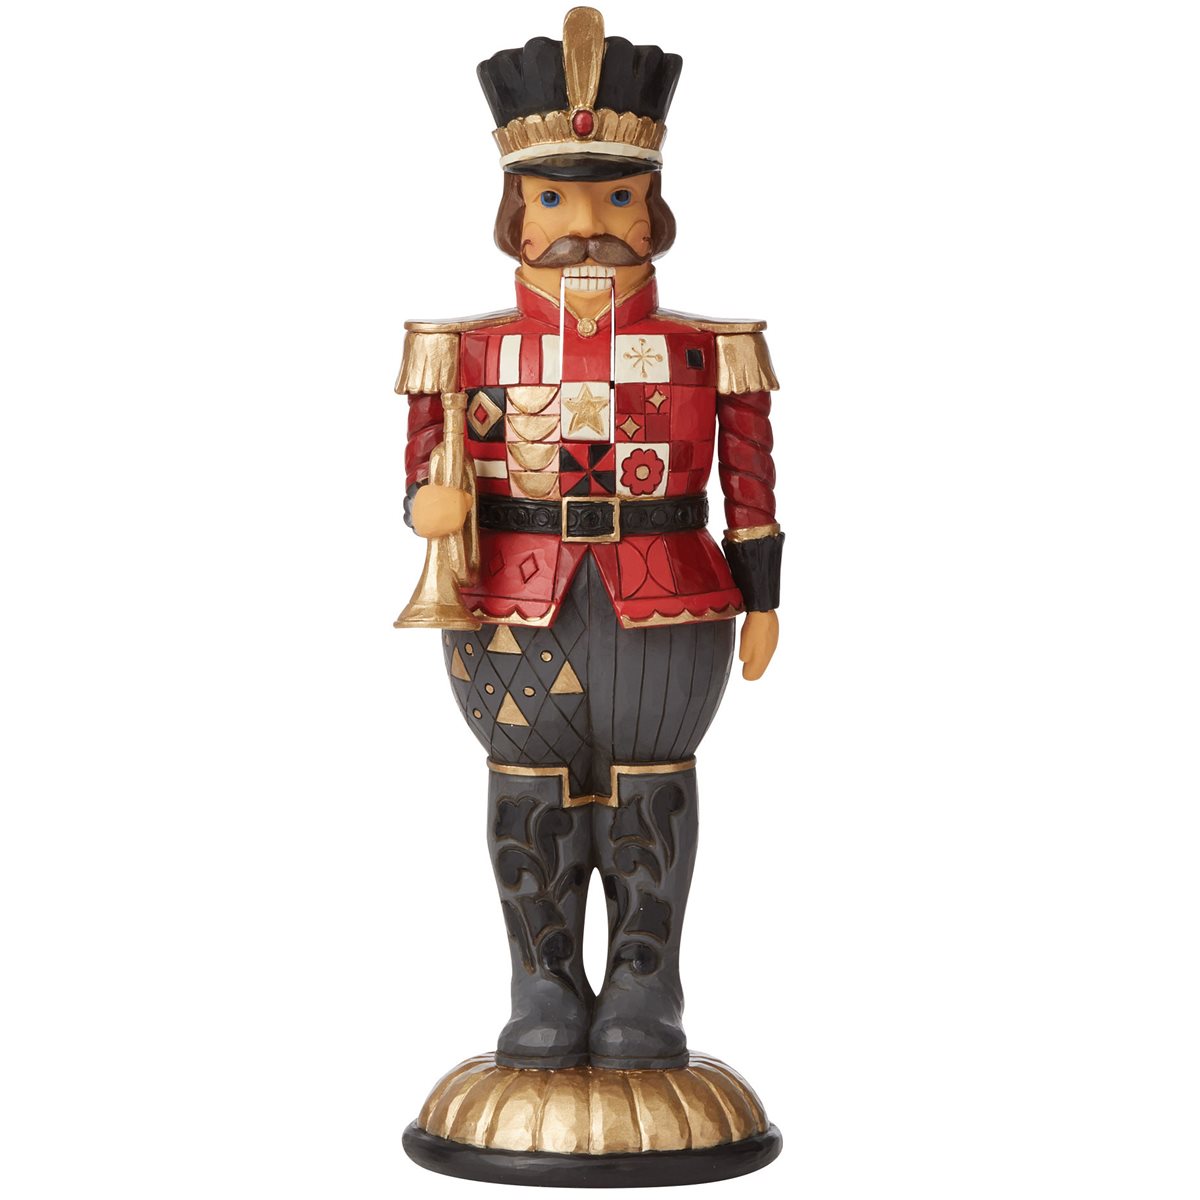 FAO Schwarz - Nutcracker Toy Soldier Statue by Jim Shore